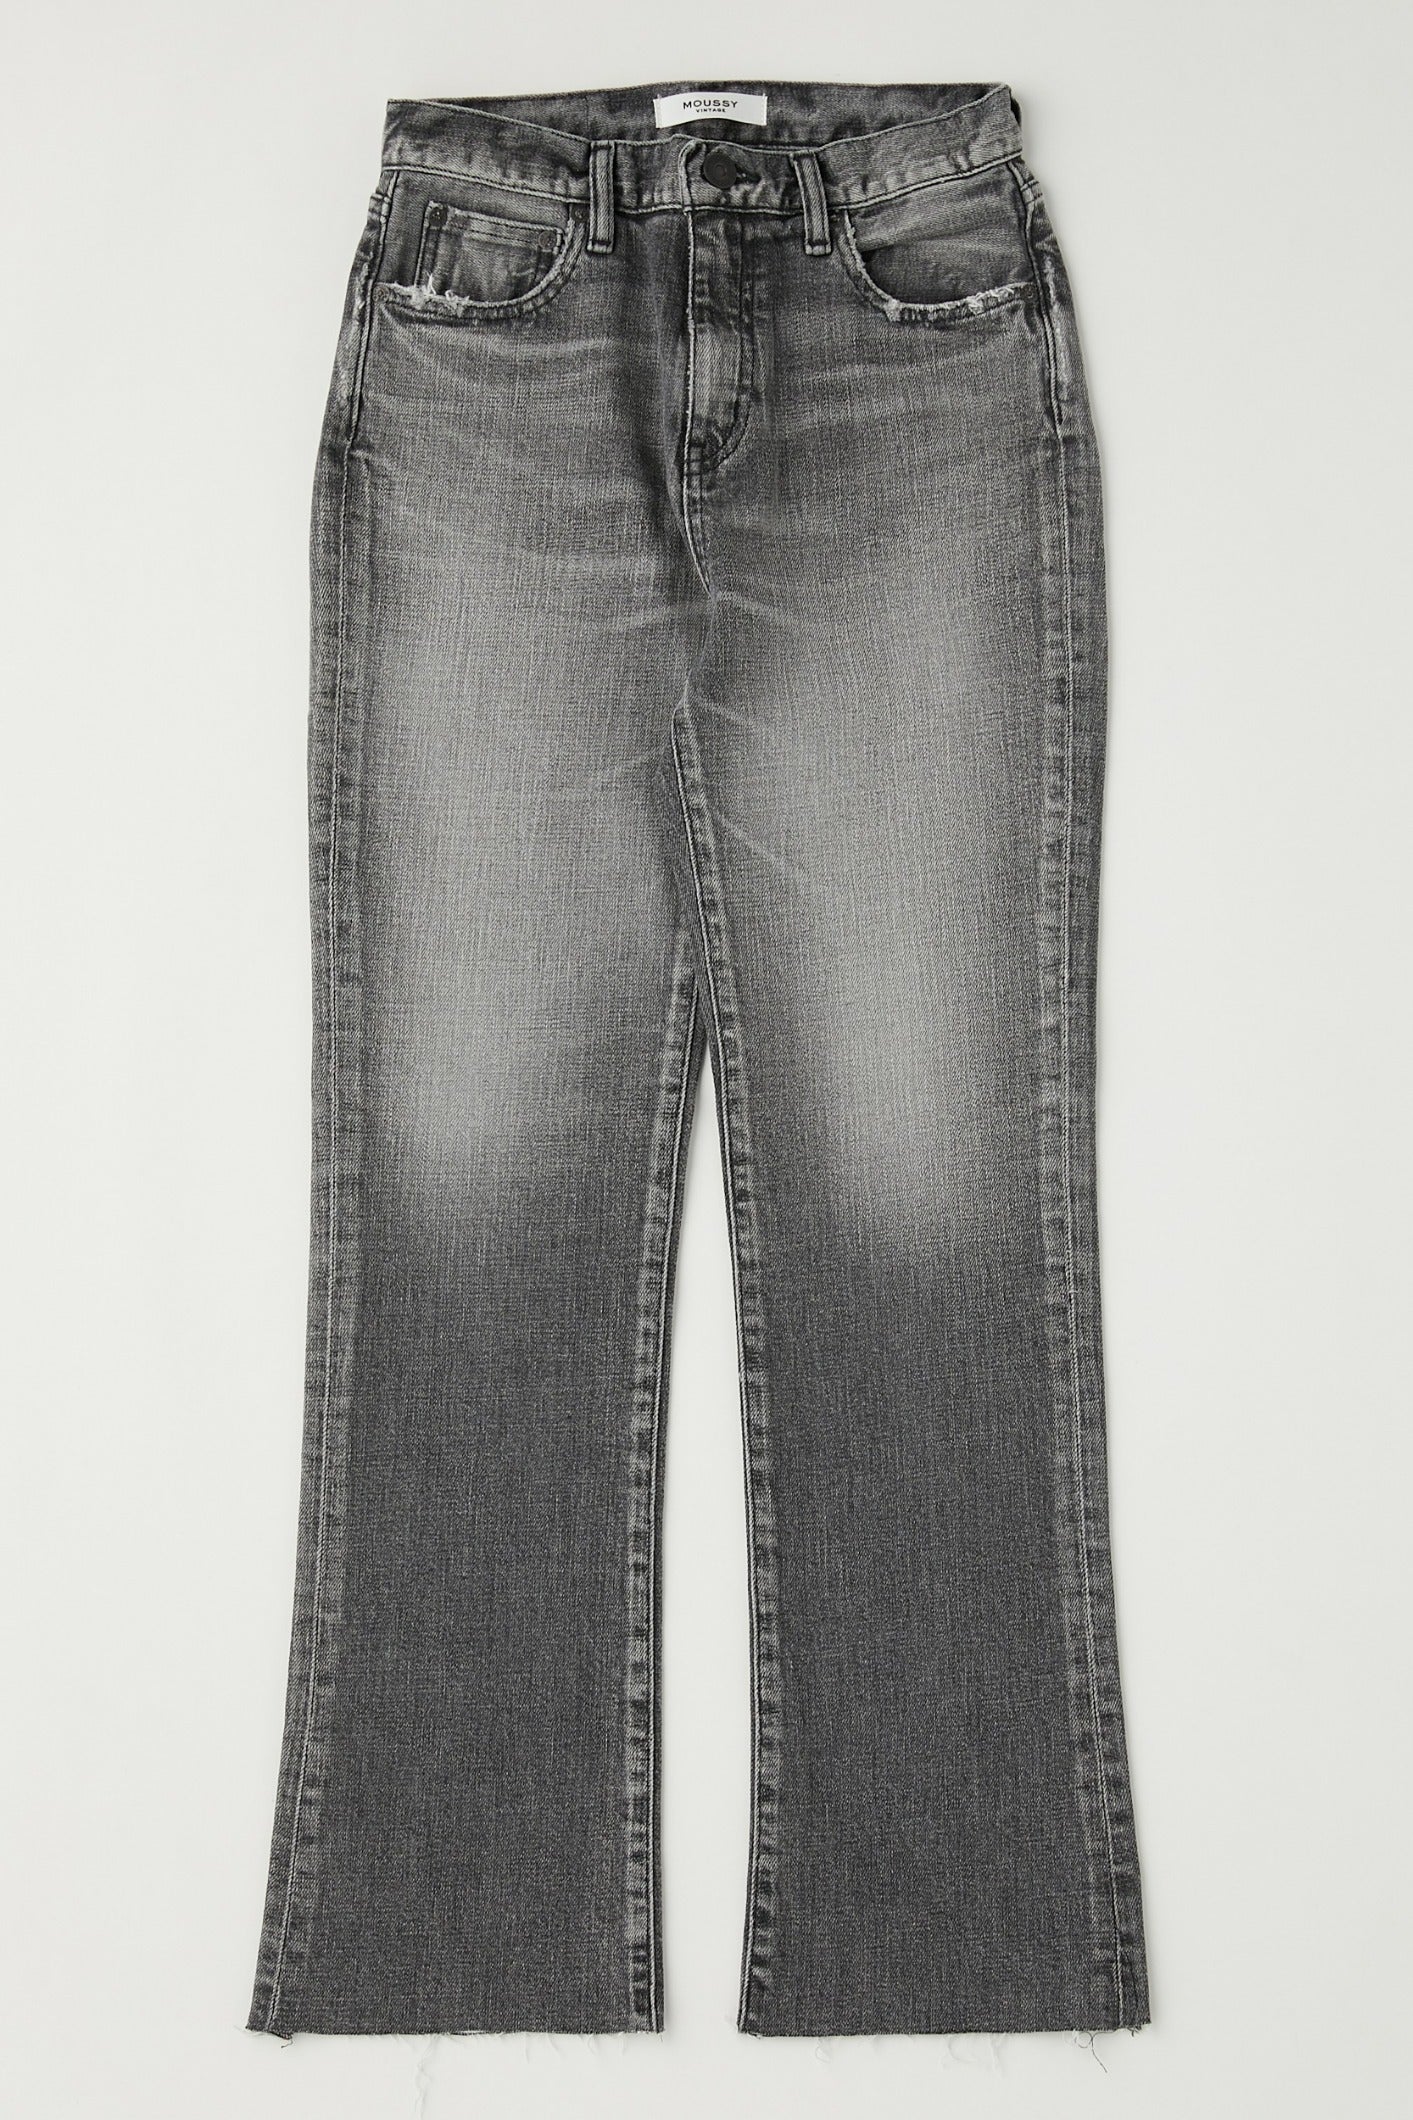 Crazy Men's Hip Hop Embroidery Baggy Jeans Denim Loose Trousers-30